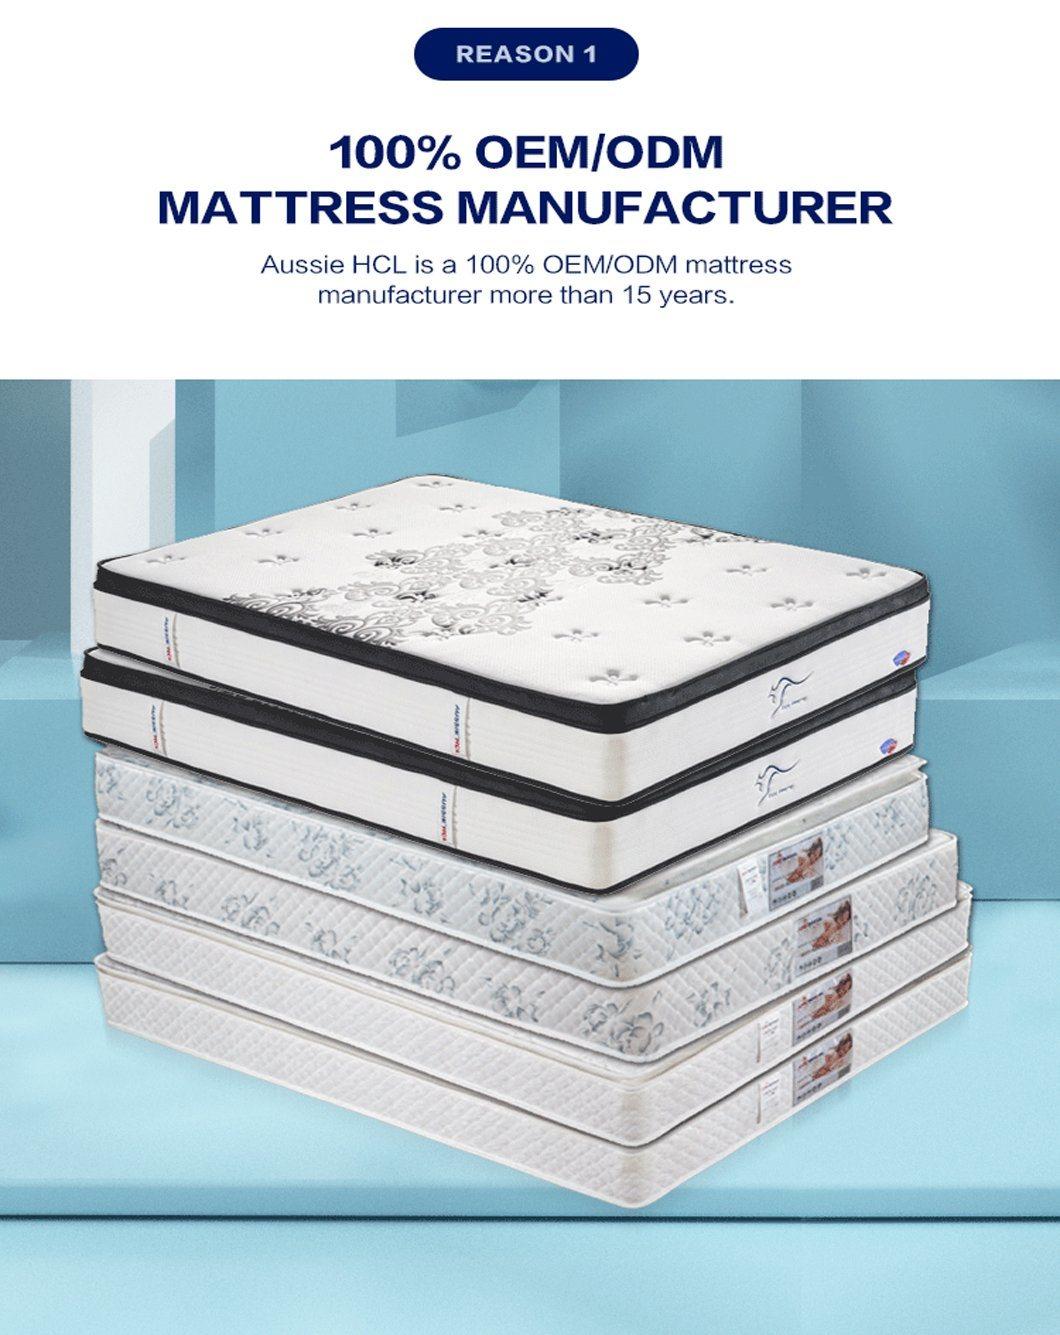 Premium High Density Sponge Innersping Mattresses Roll Sleeping Double Inch Full Queen King Box Spring Foam Mattress